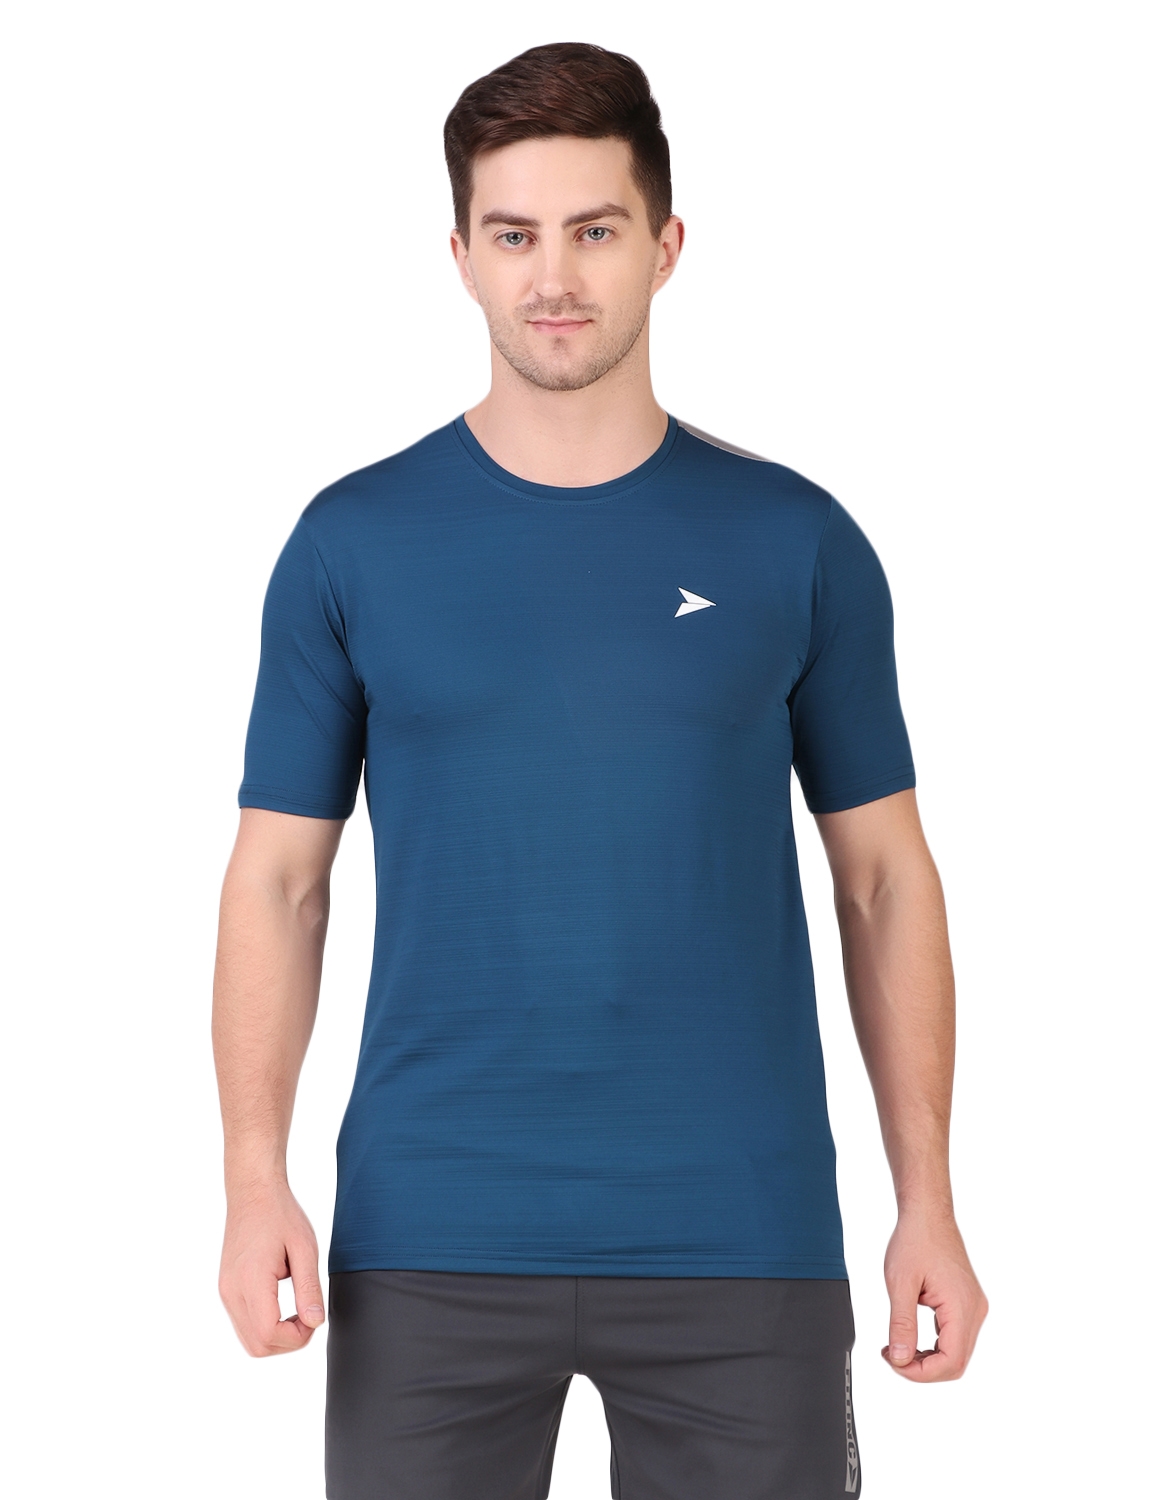 Fitinc Men's Round Neck Slimfit Gym & Active Sports Airforce T-Shirt